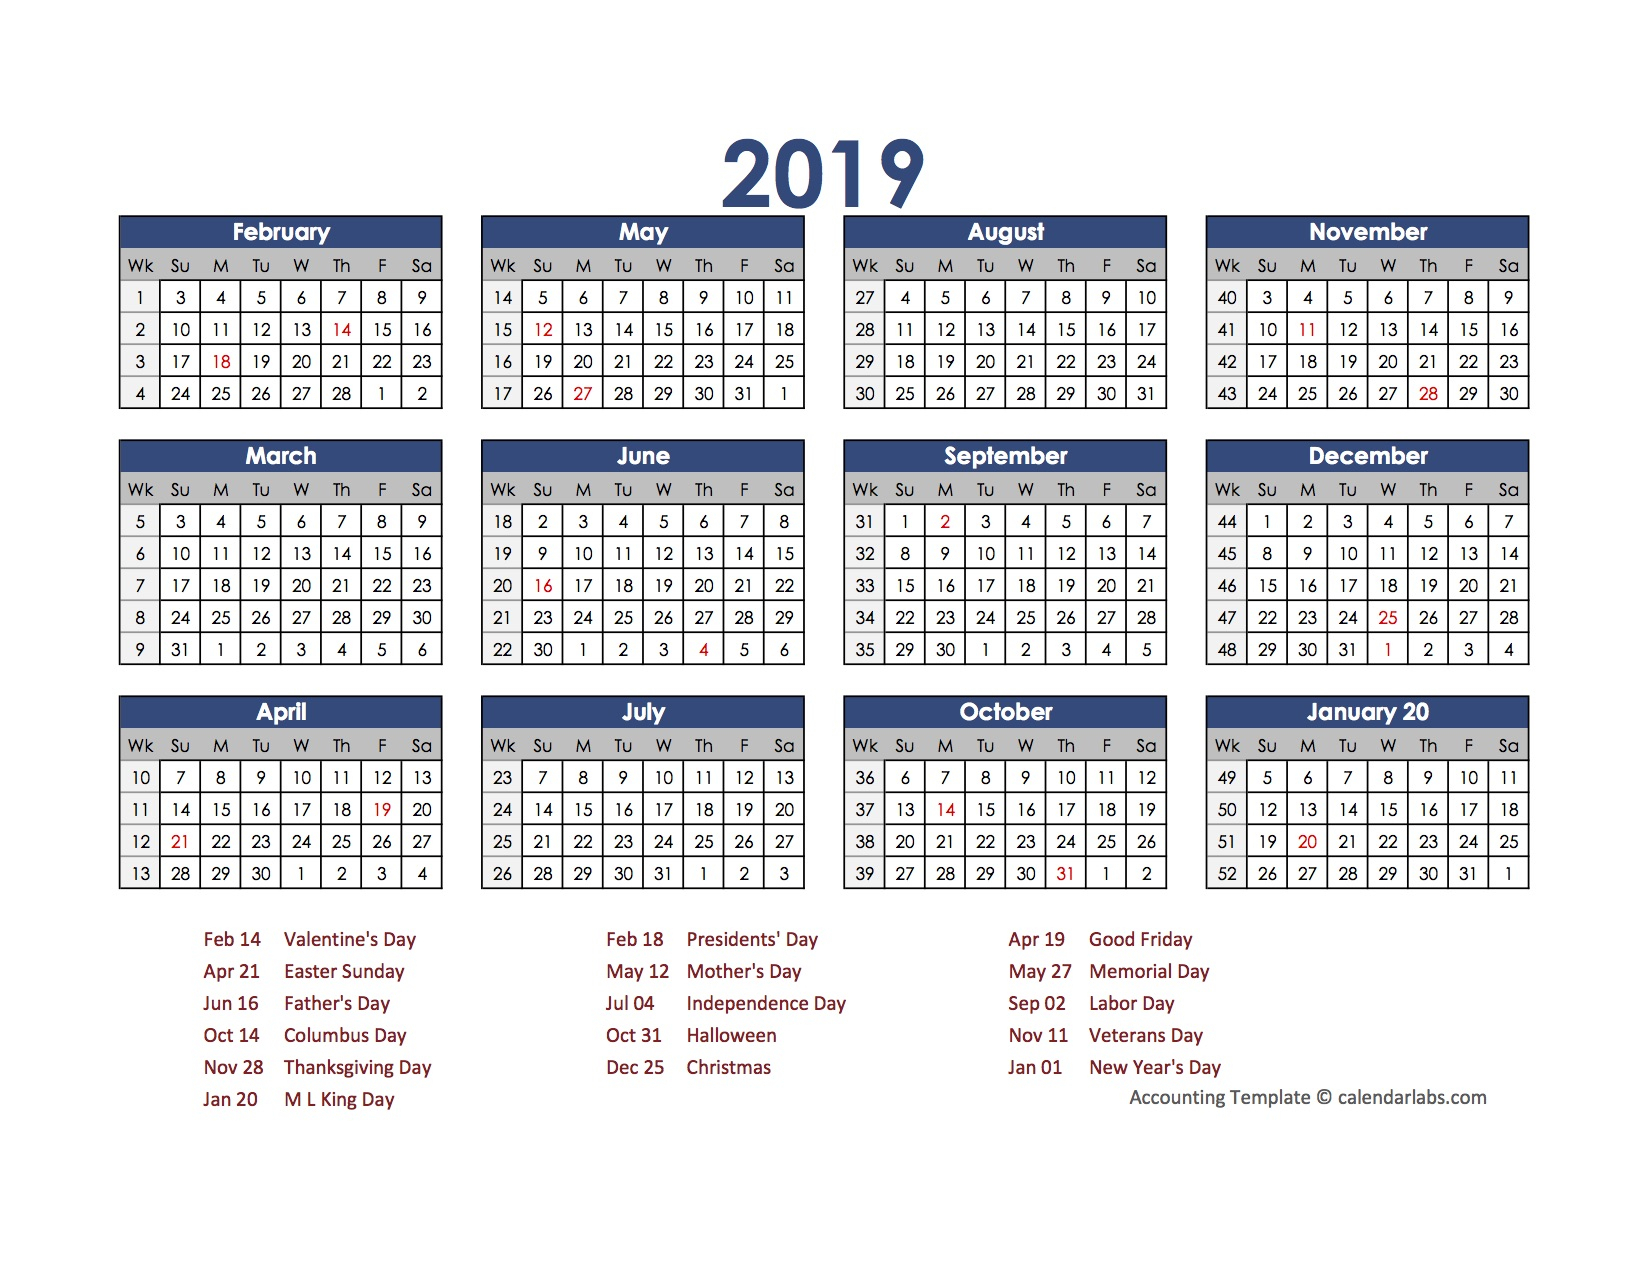 2019 Accounting Calendar 4-5-4 - Free Printable Templates